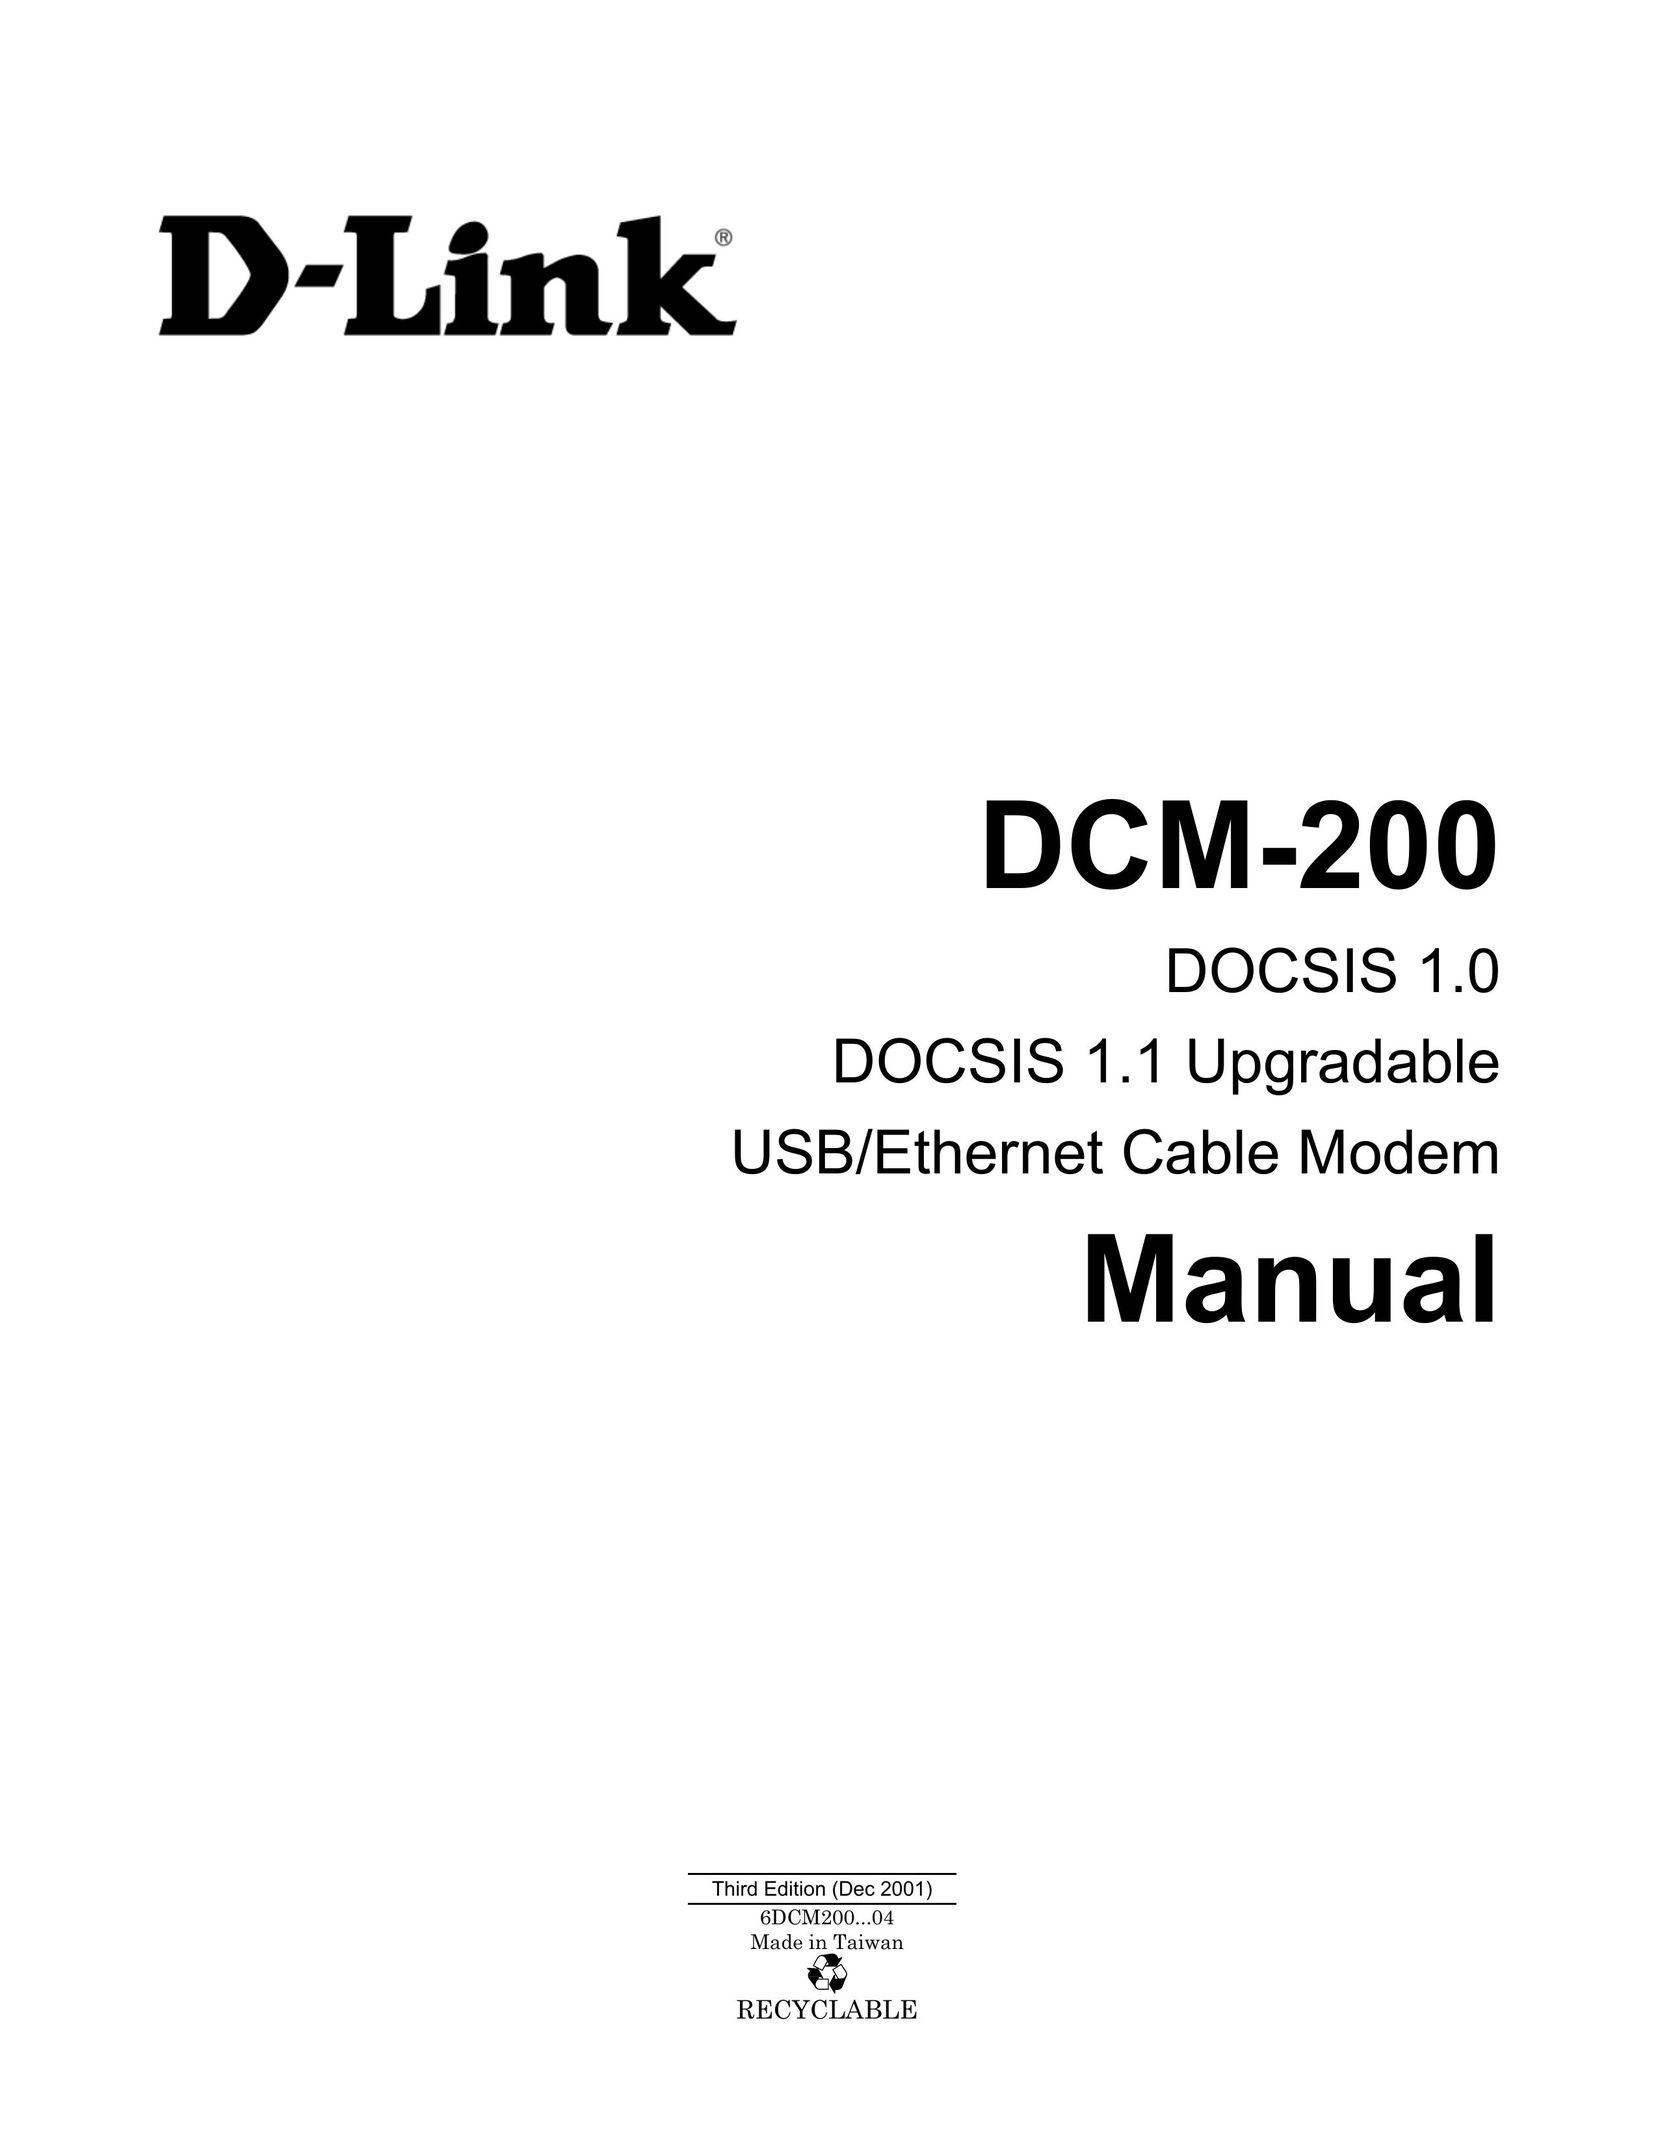 D-Link DCM-200 Network Card User Manual